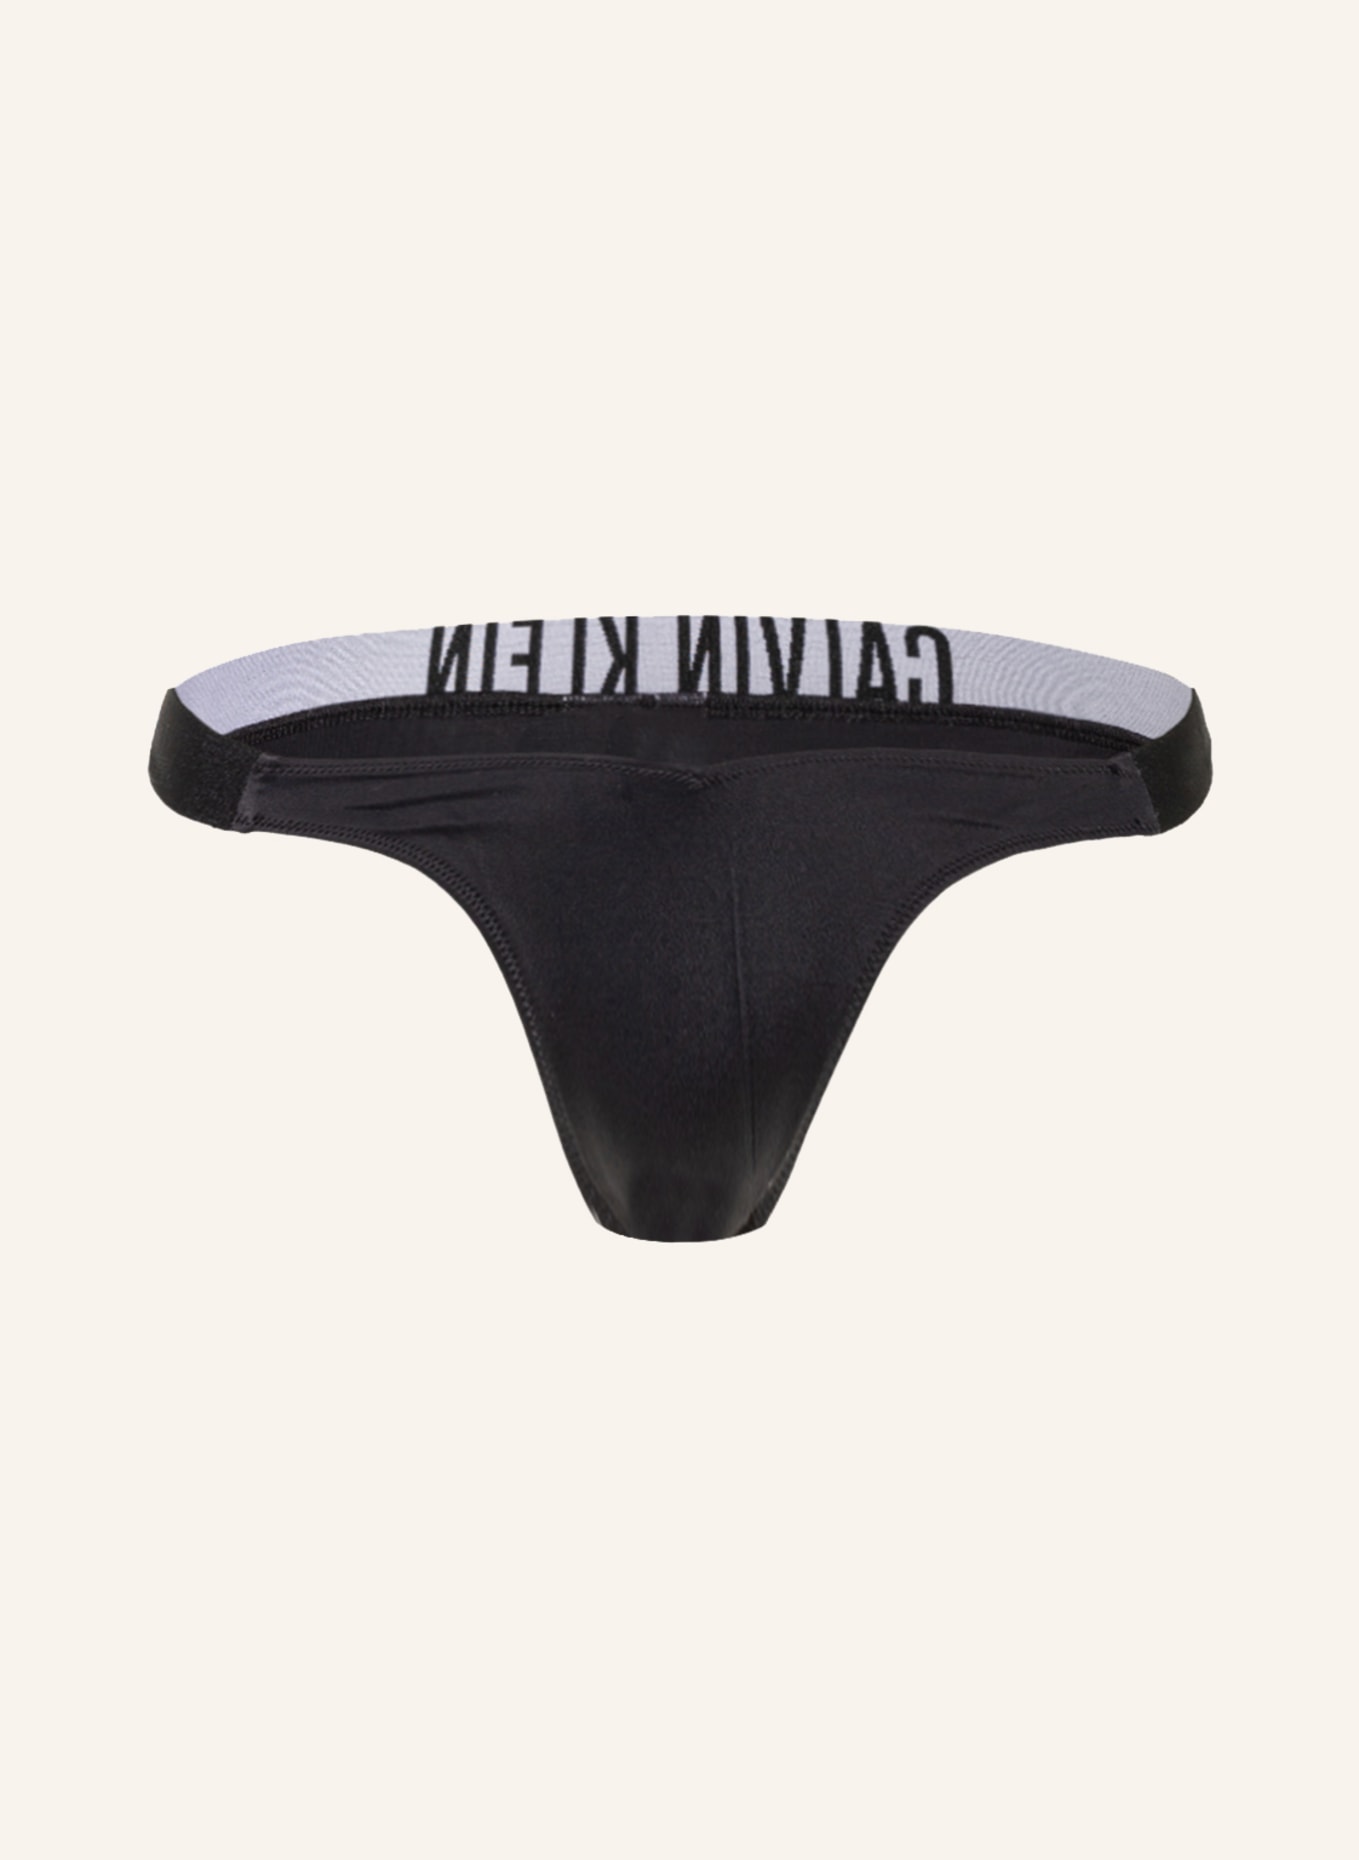 Calvin Klein Brazilian bikini bottoms INTENSE POWER